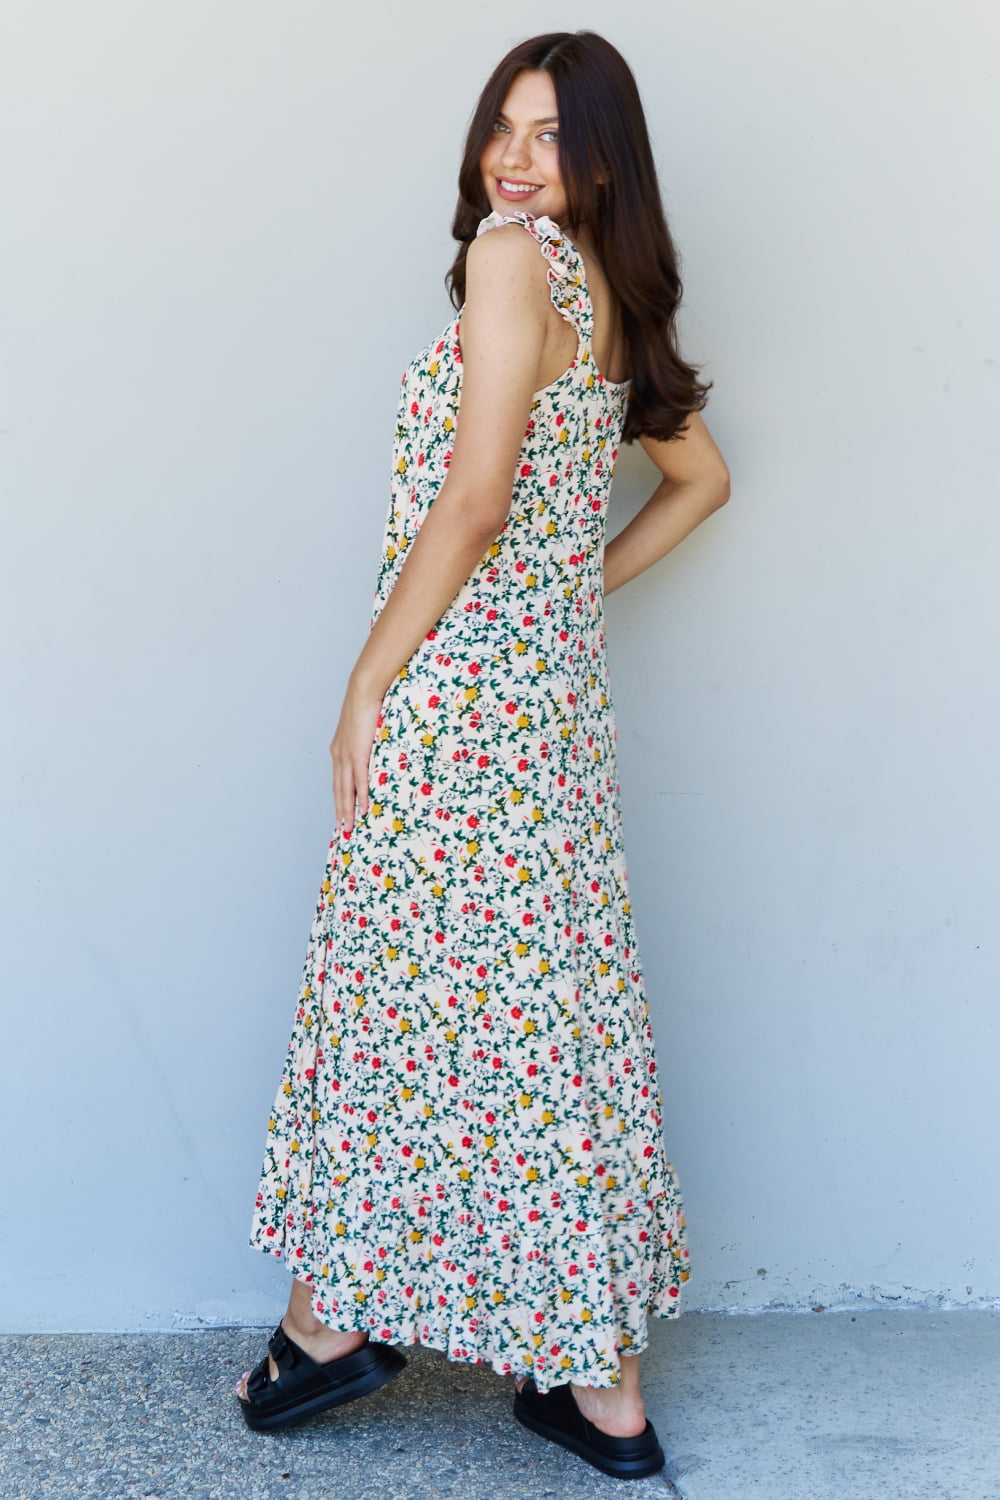 Womens / Teen Girls - Doublju In The Garden Ruffle Floral Maxi Dress in Natural Rose - Sizes S-XL